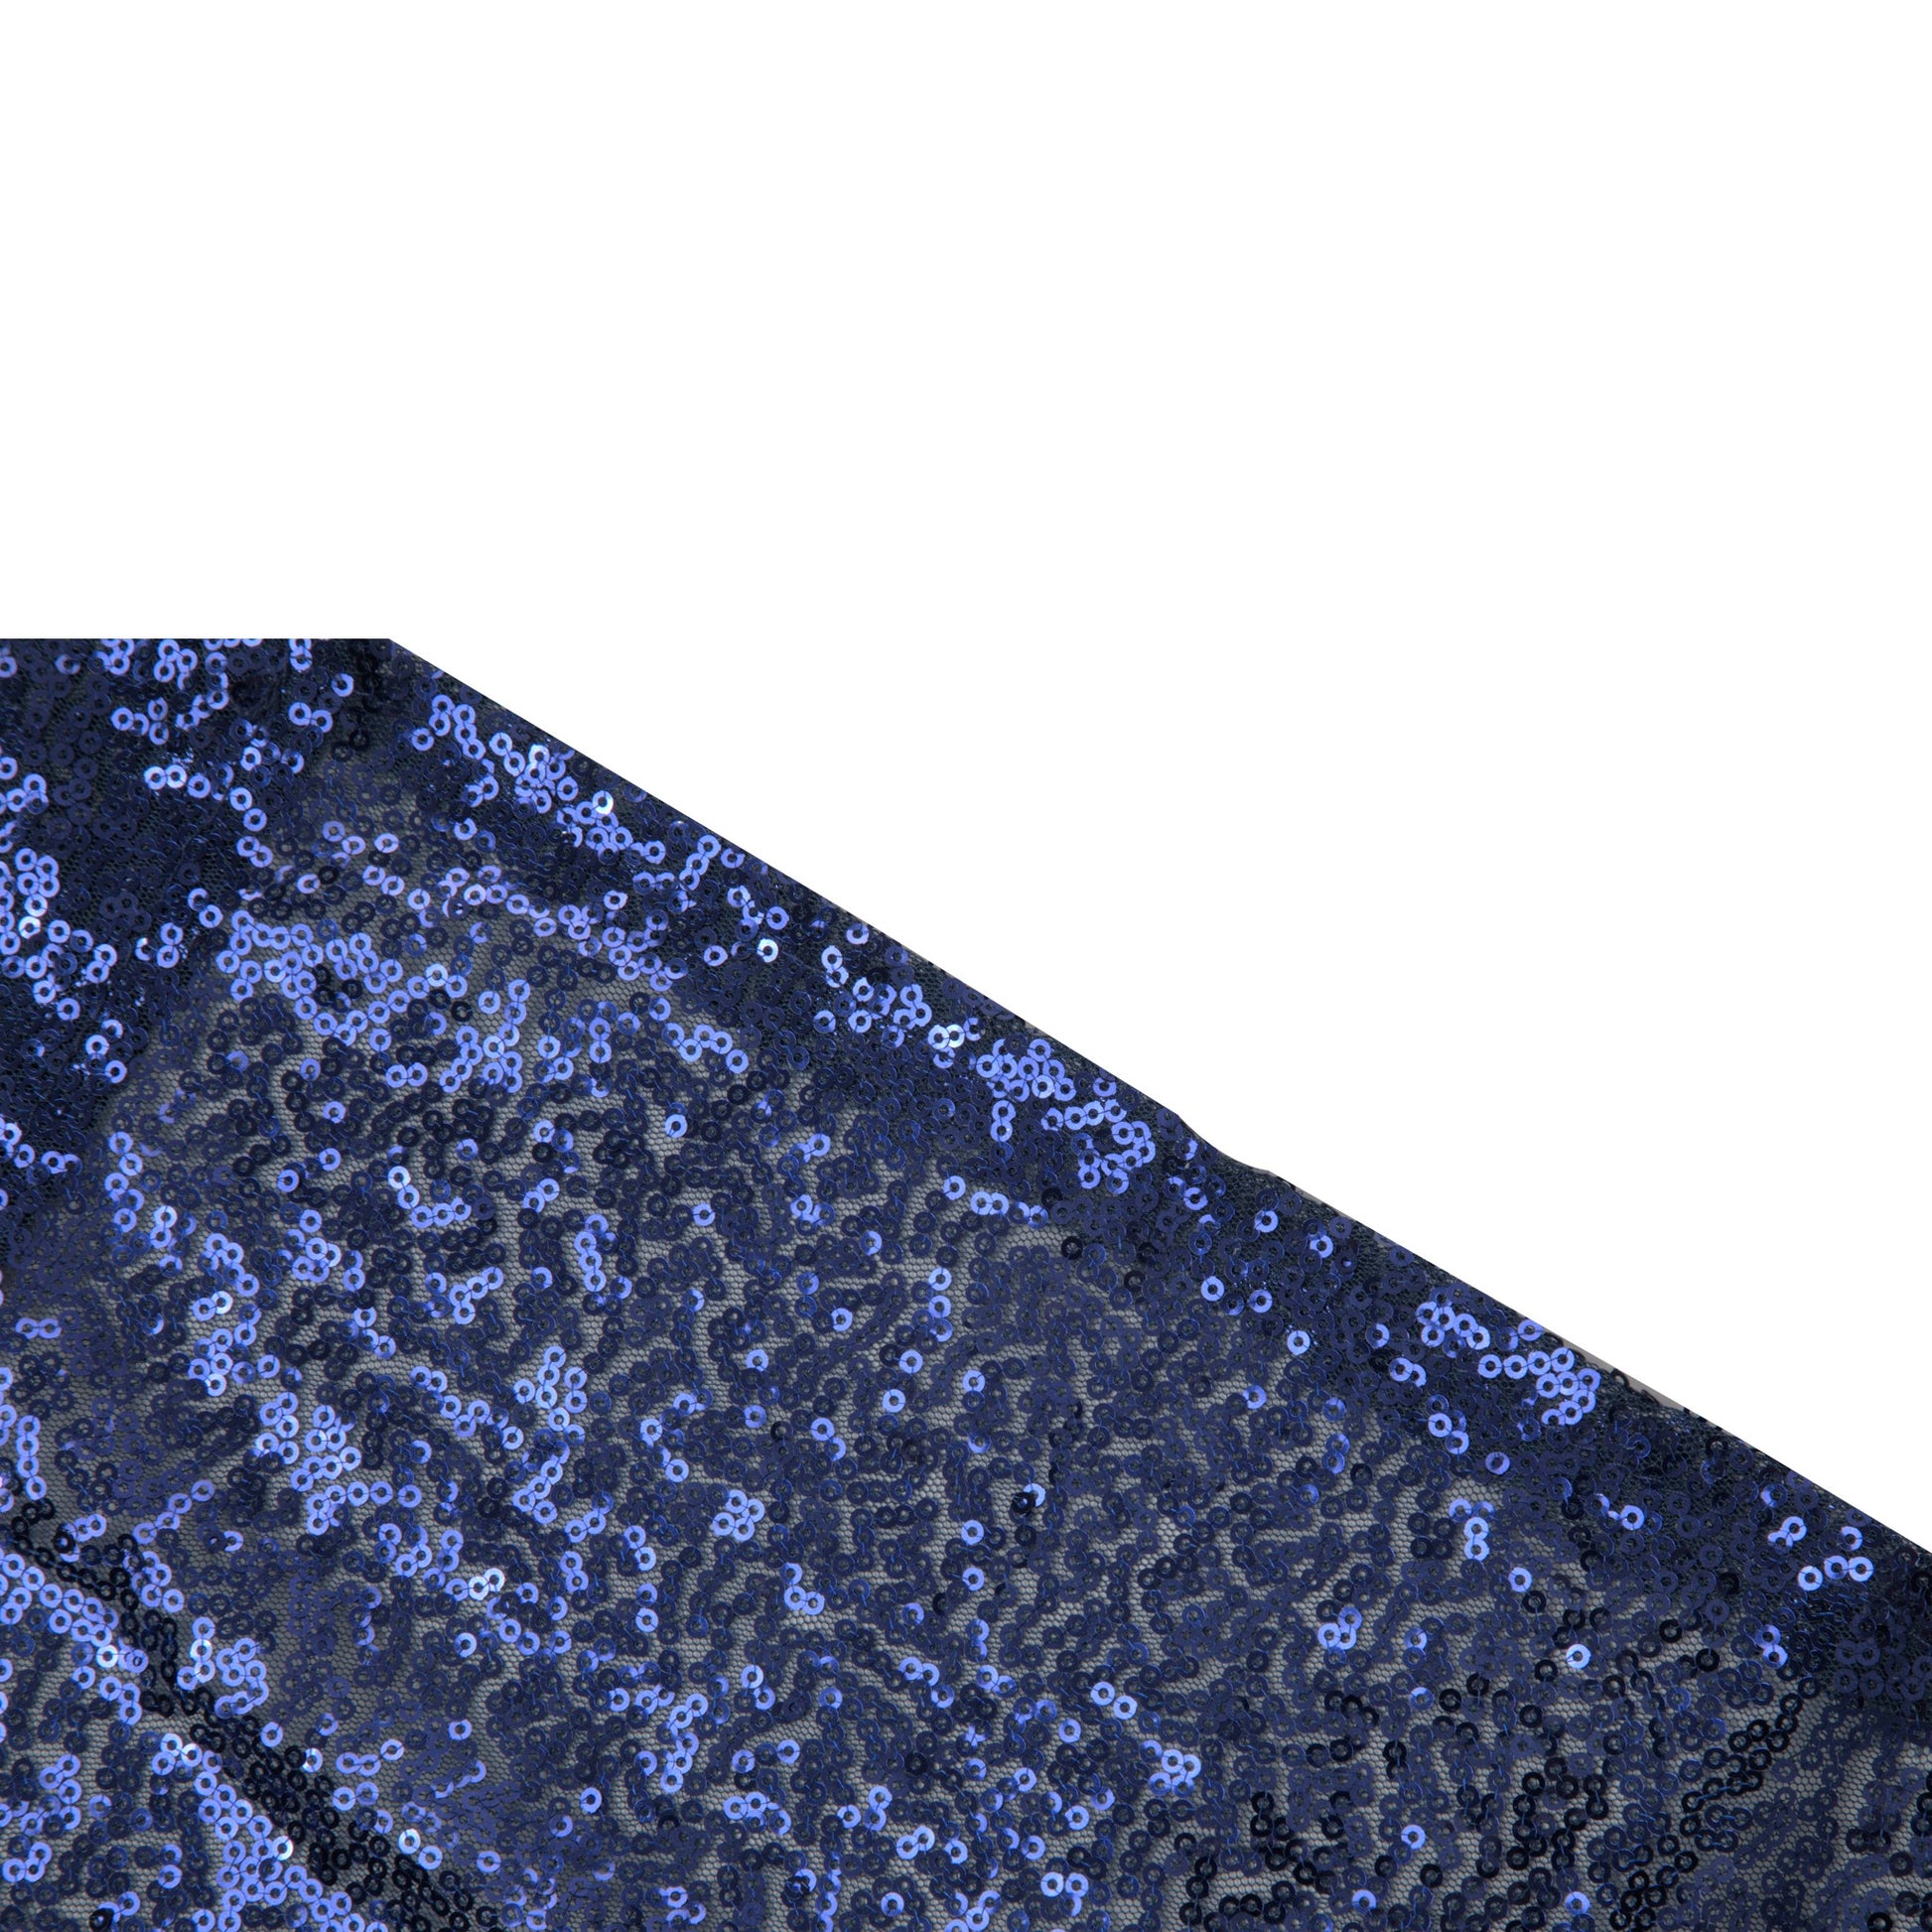 Glitz Sequin Mesh Net 12ft H x 52" W Drape/Backdrop panel - Navy Blue